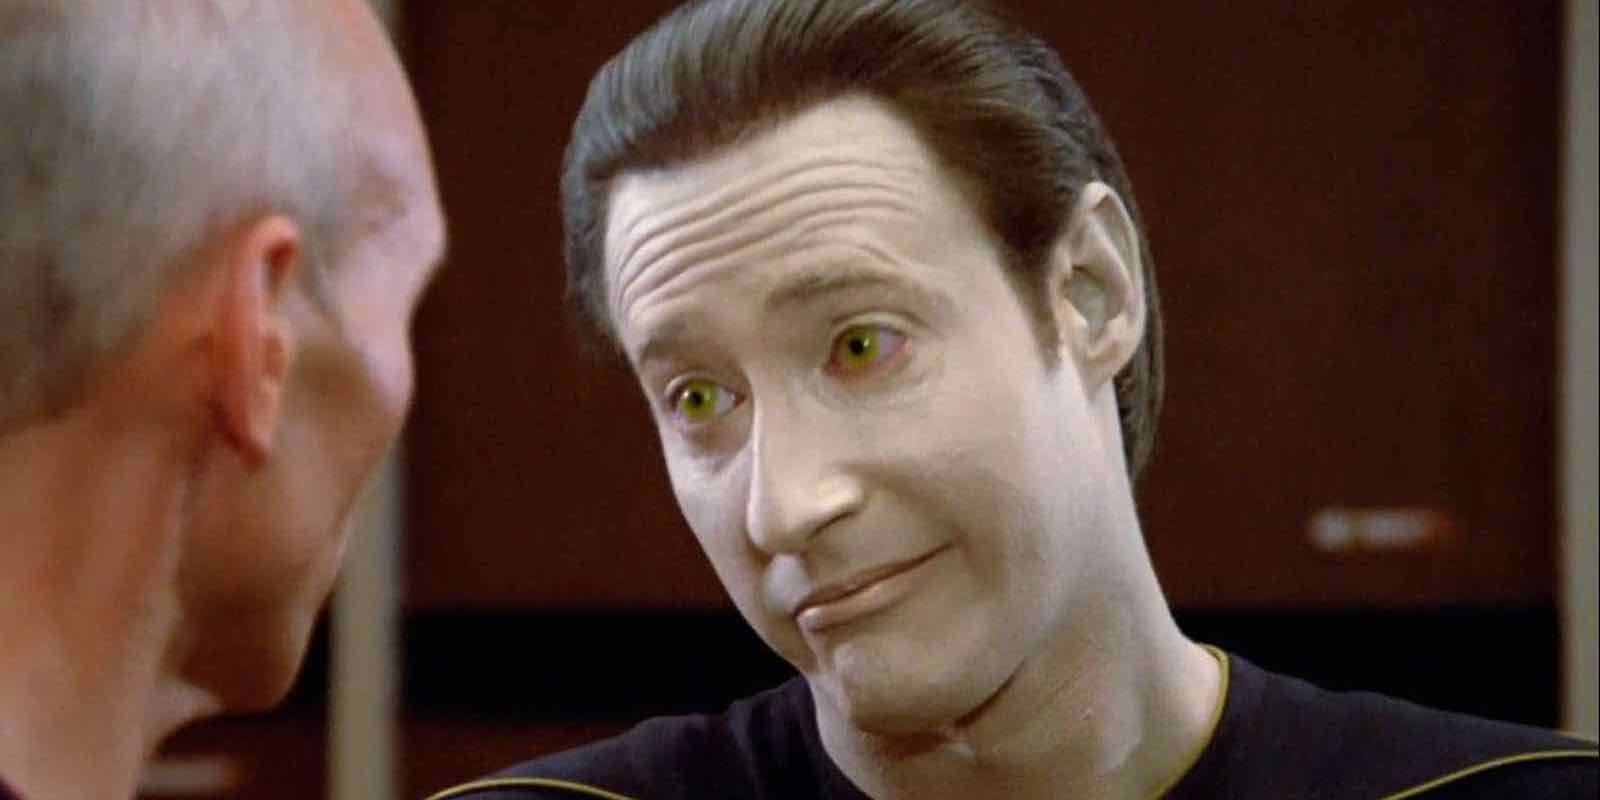 Mr Data looking unimpressed in Star Trek The Next Generation